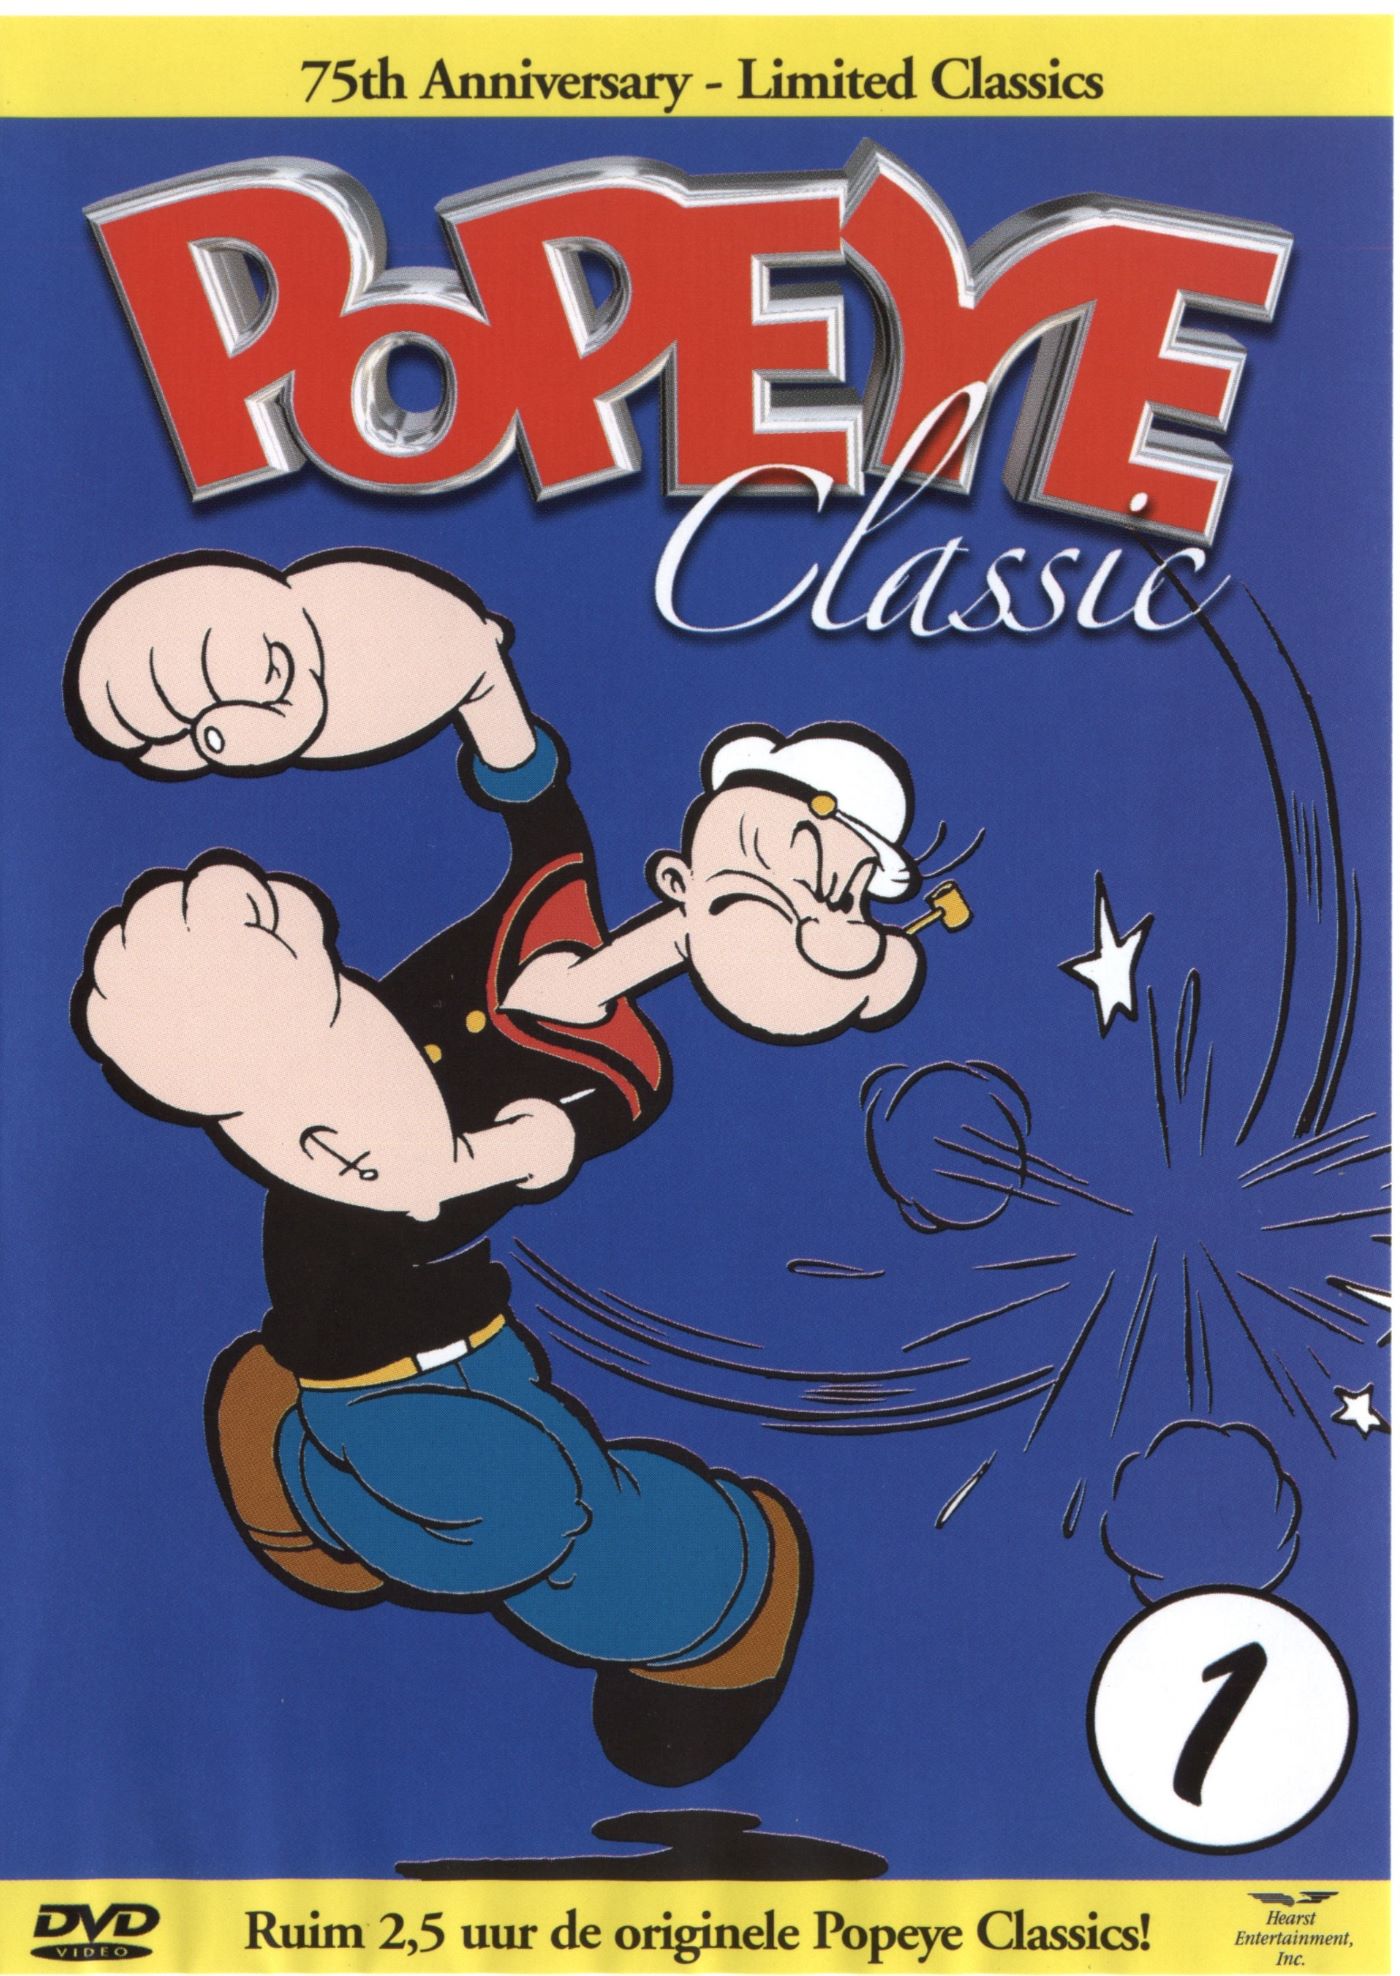 Popeye Classic - 75th Anniversary Limited Edition (DVD 1 van 4)